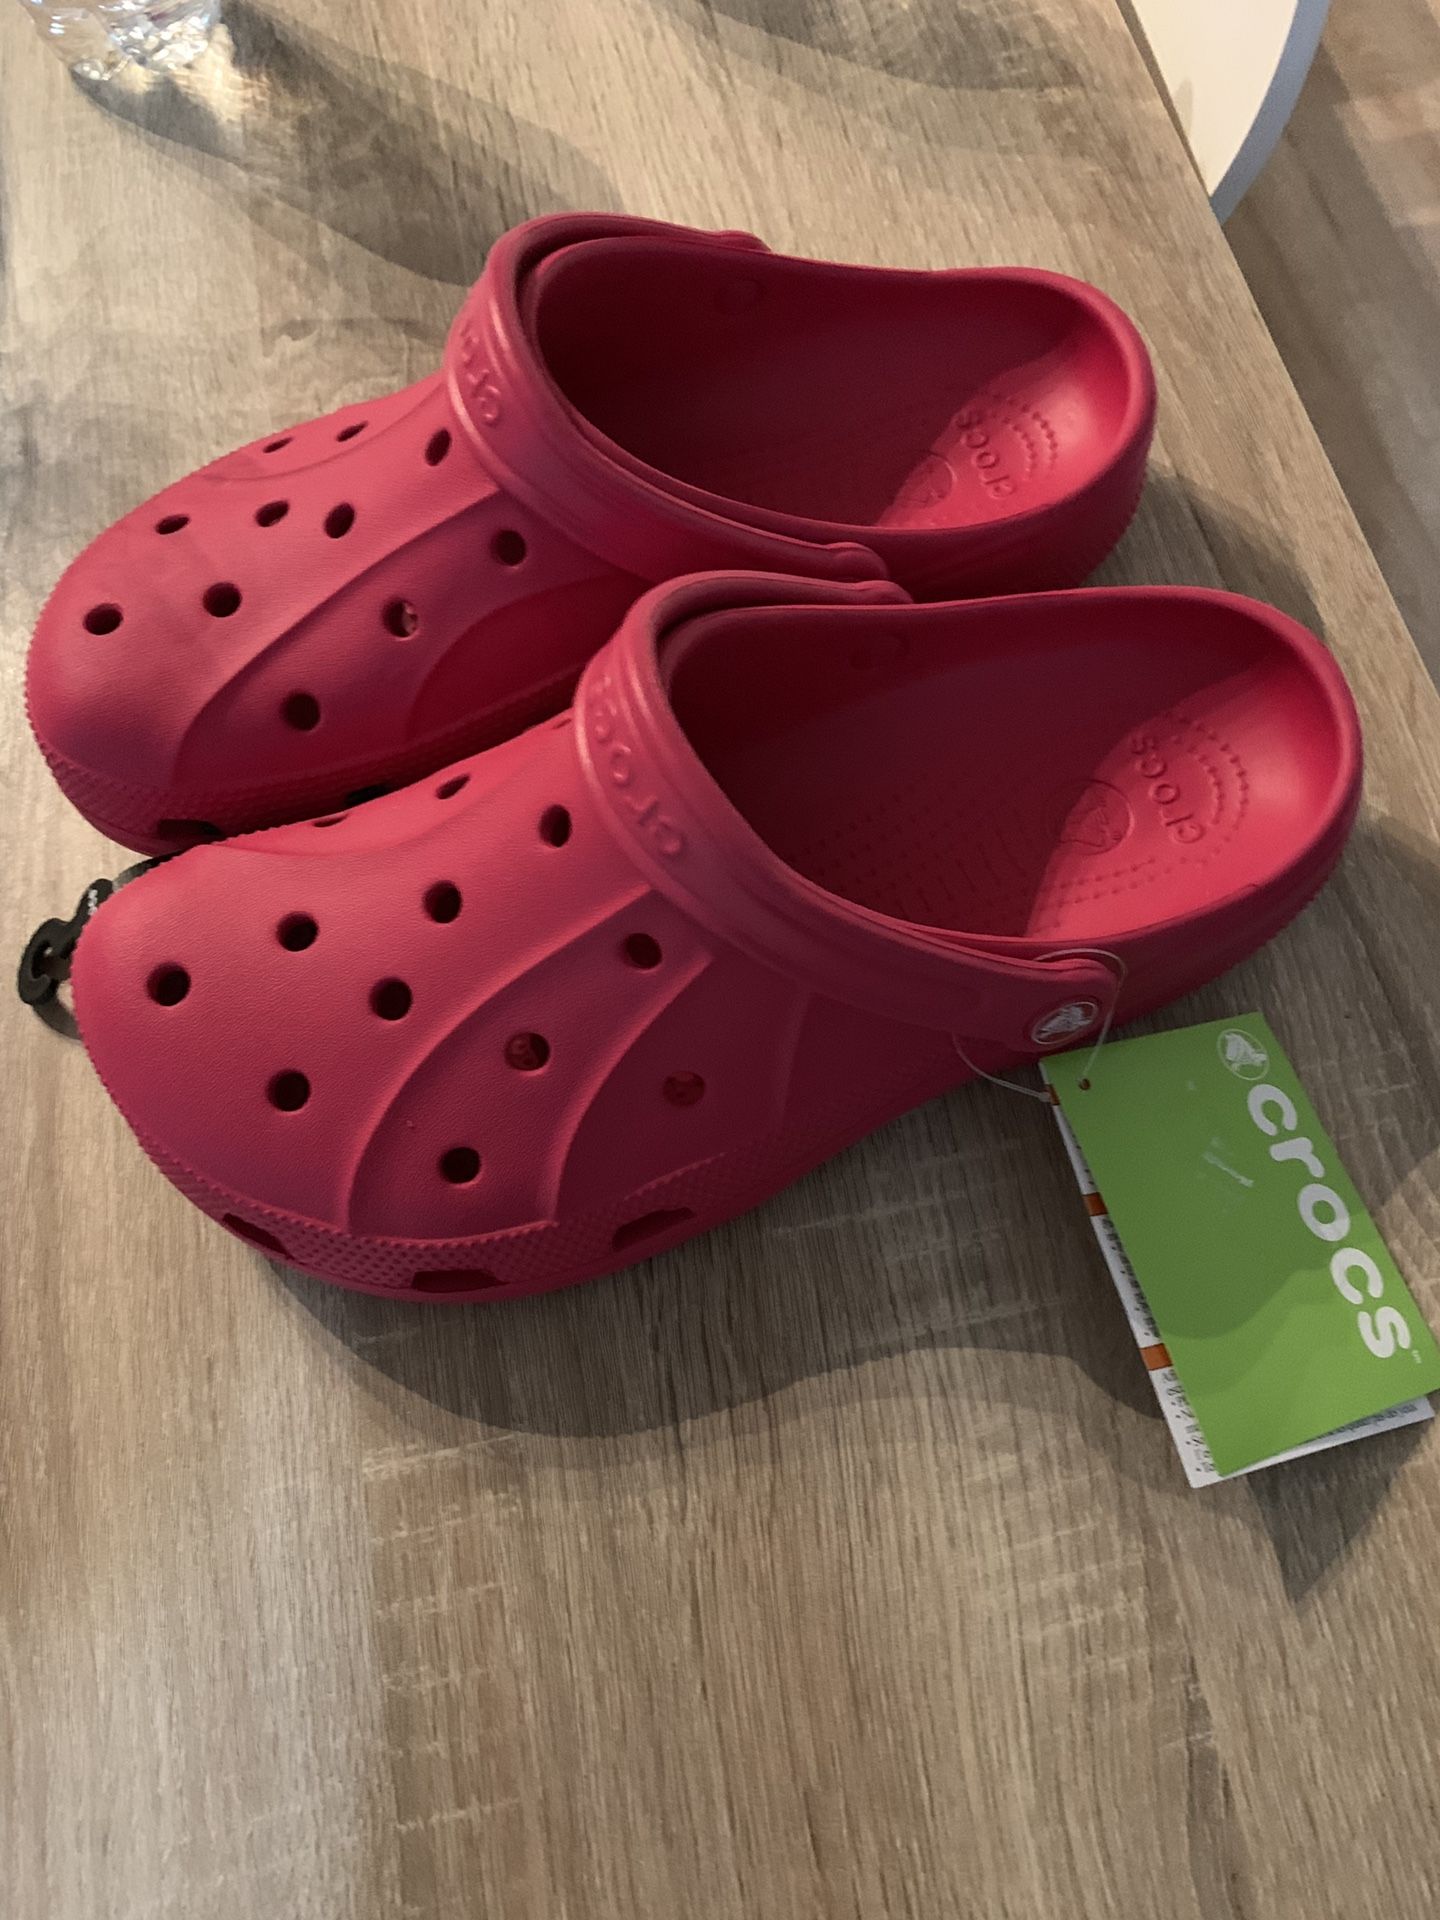 NEW hot pink Crocs sz 9M / 11W